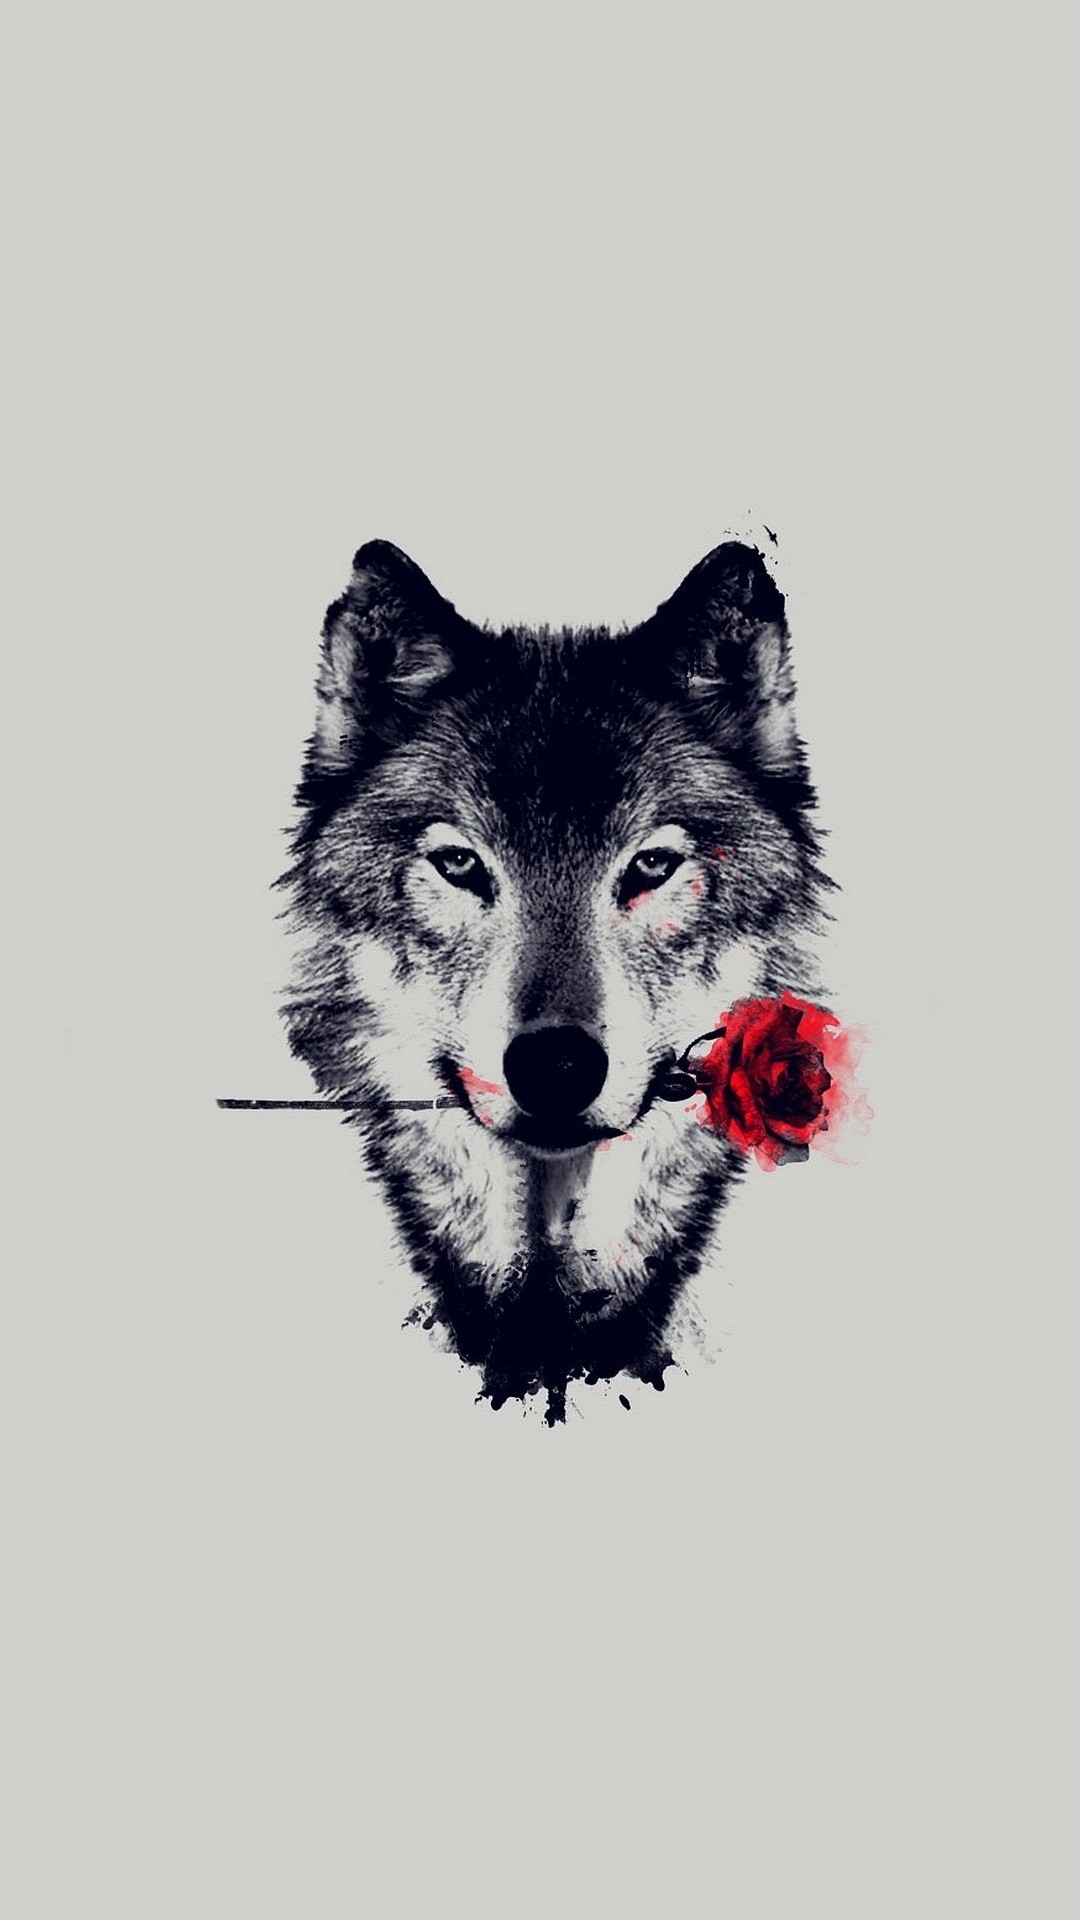 1080x1920 Wolf Red Rose Art Wallpaper iPhone resolution 